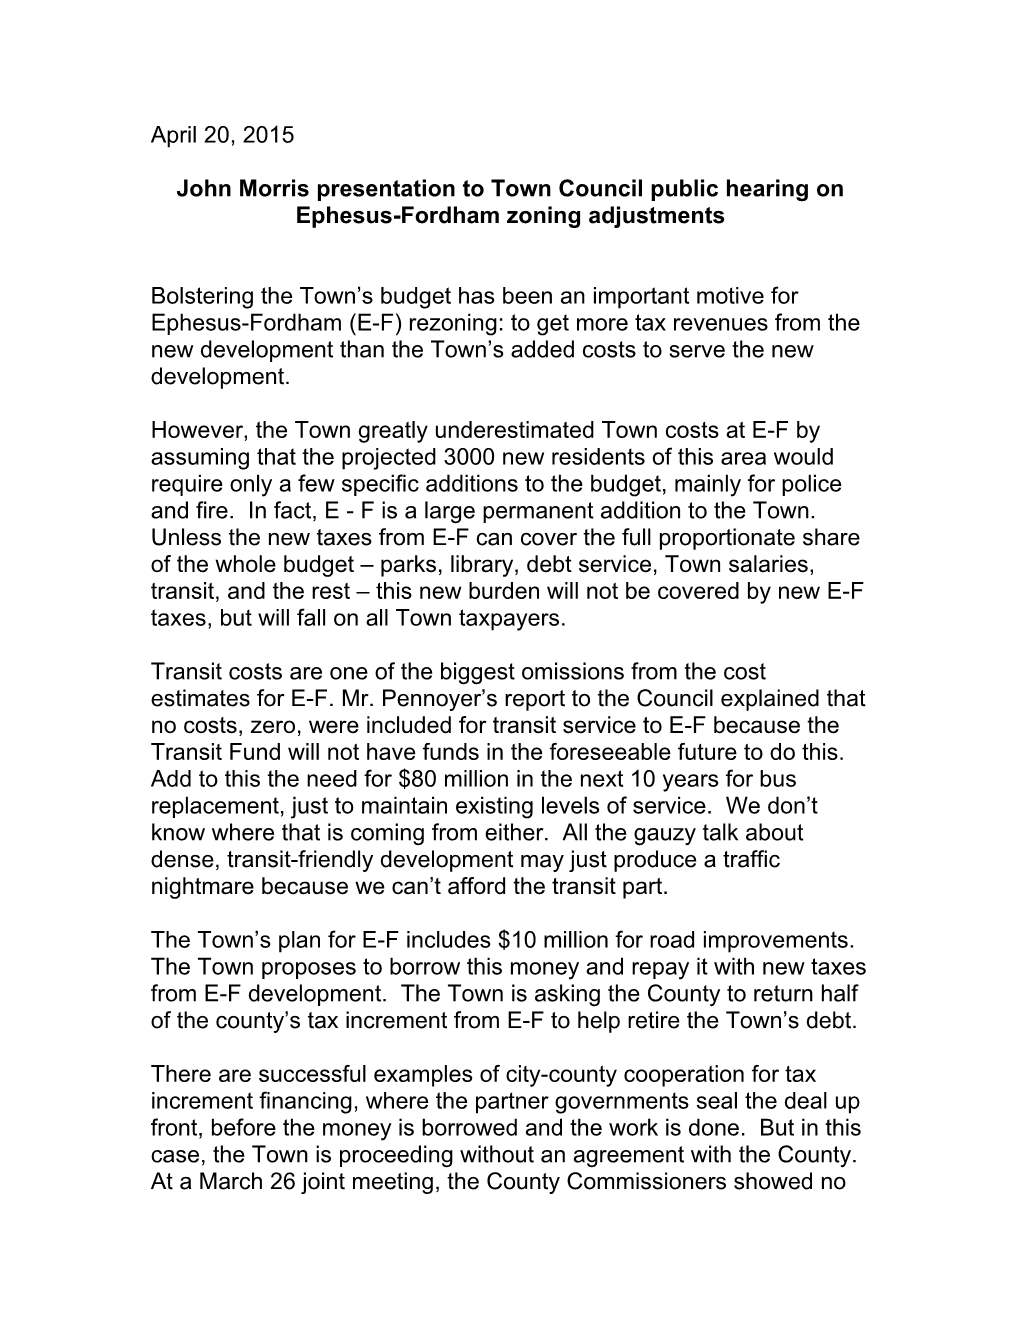 John Morris Presentation to Town Council Public Hearing on Ephesus-Fordham Zoning Adjustments